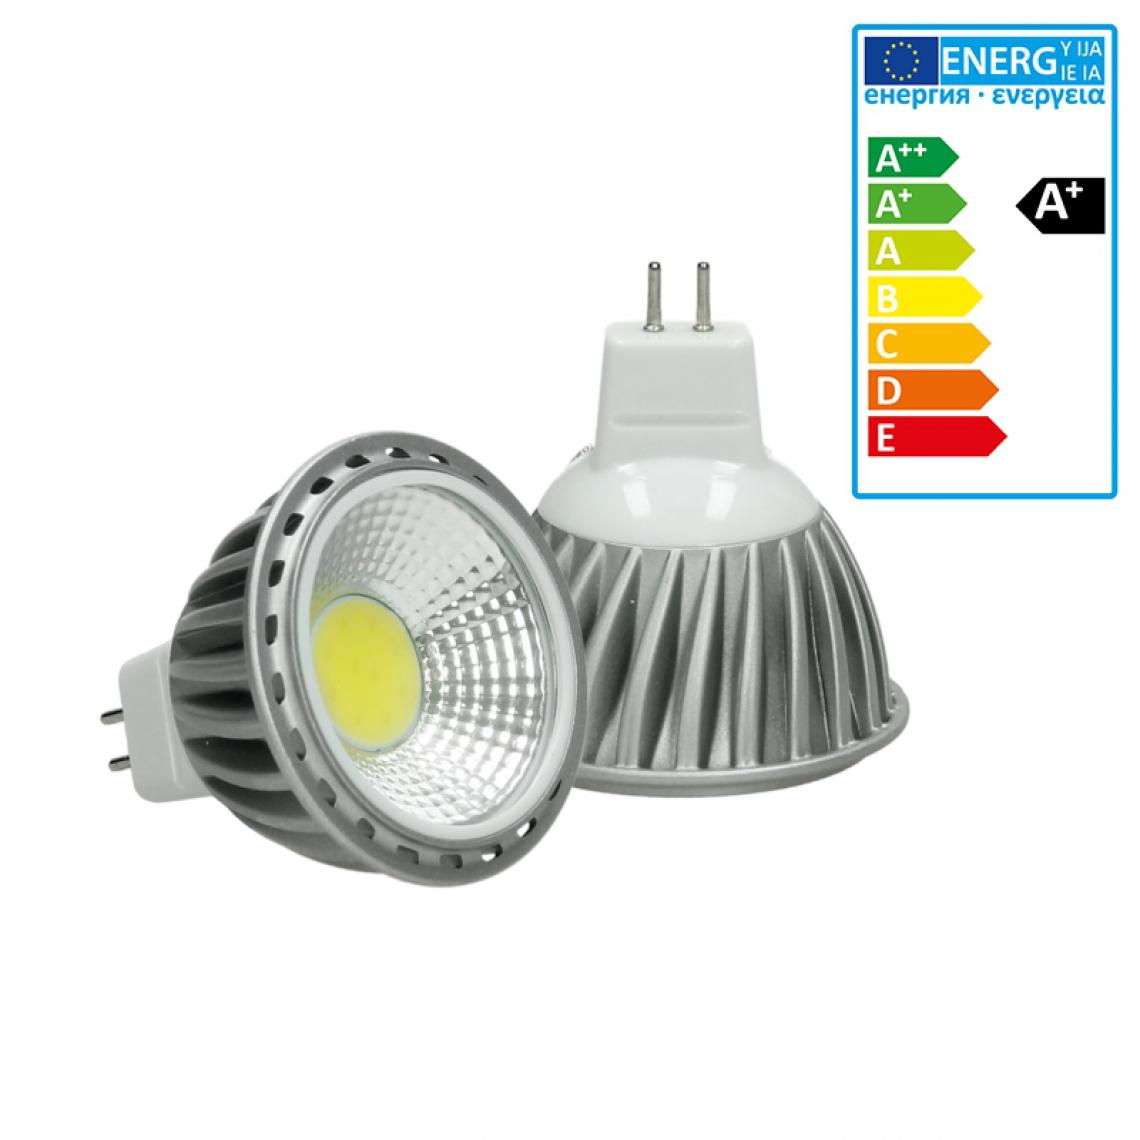 Ecd Germany - ECD Germany LED COB MR16 Spot Lampe Ampoule 6W blanc chaud - Ampoules LED